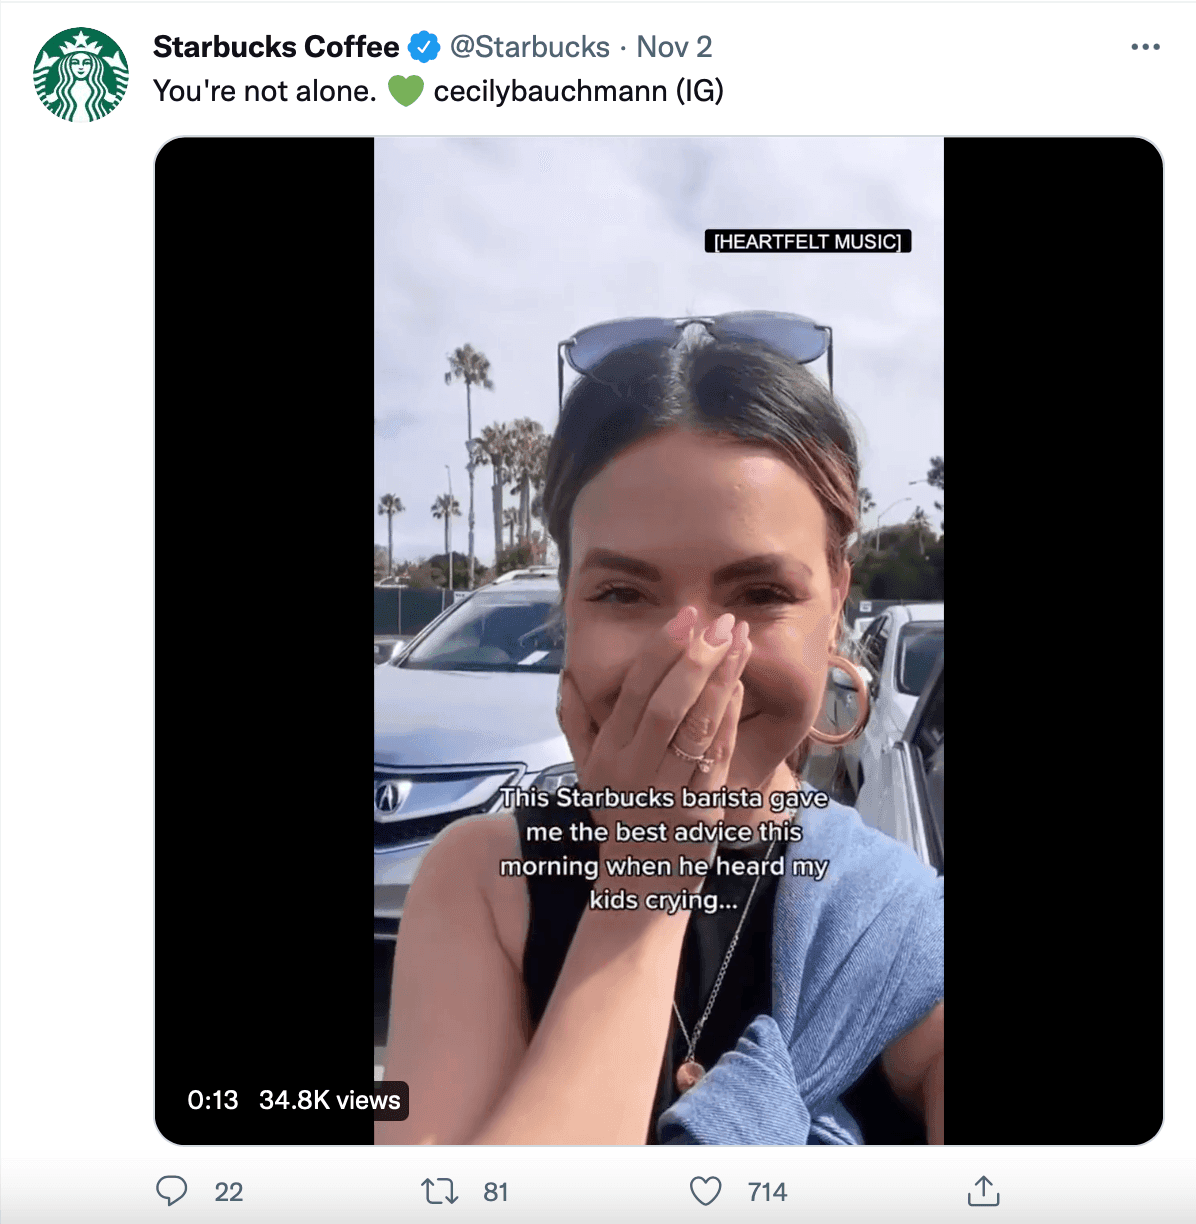 Starbucks sharing brand story on social media